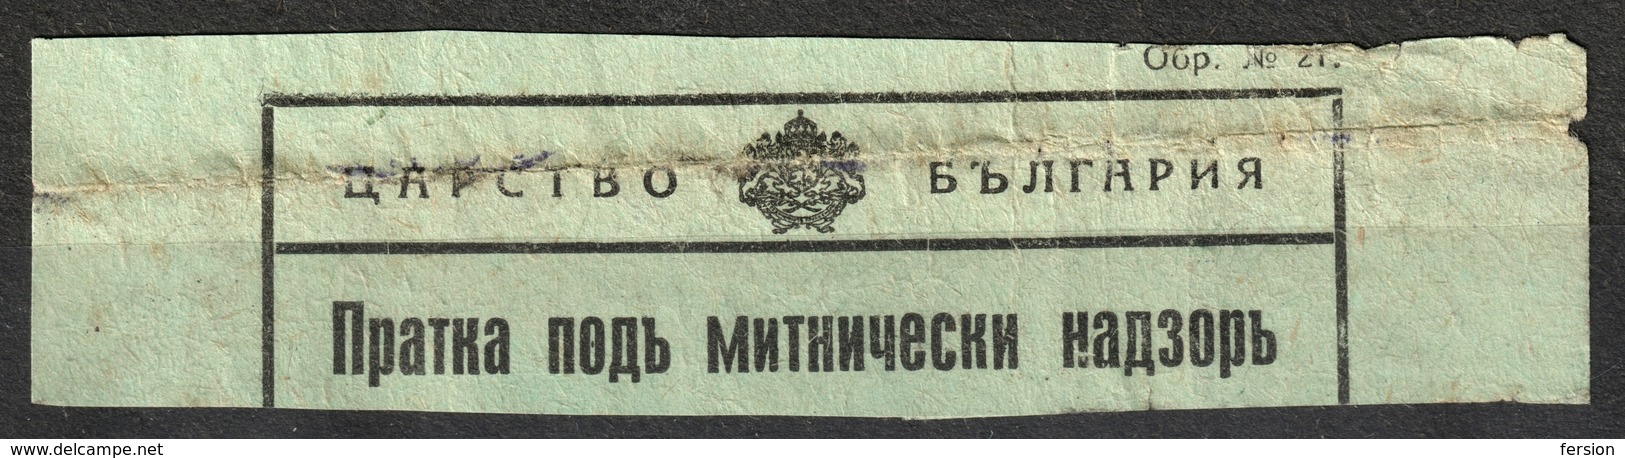 BULGARIA 1930's - Railway Customs Declaration - DÉCLARATION EN DOUANE / LABEL VIGNETTE - Used - Sellos De Servicio